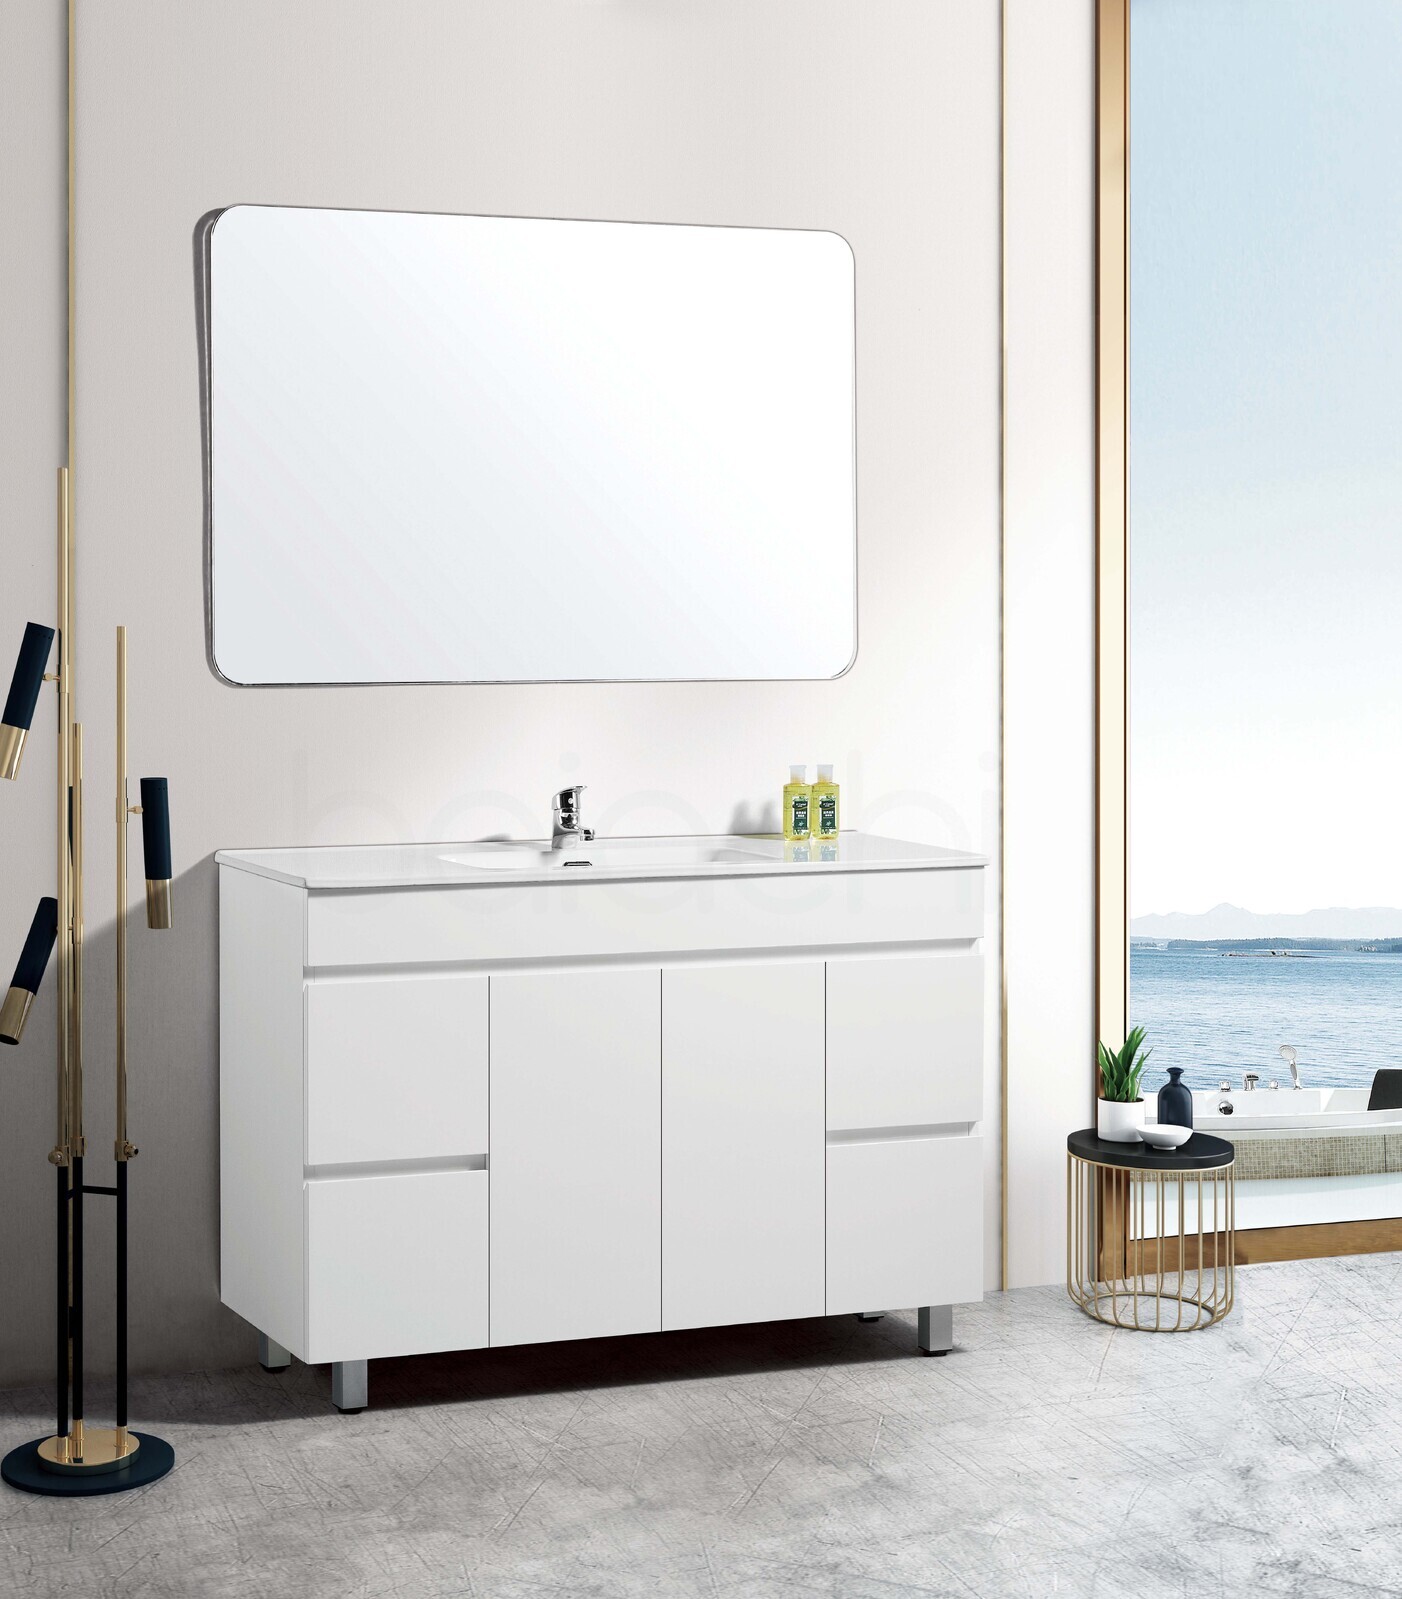 Windsor 1200mm Bathroom Vanity Cabinet Unit Wash Basin Sink Storage Freestanding Ebay